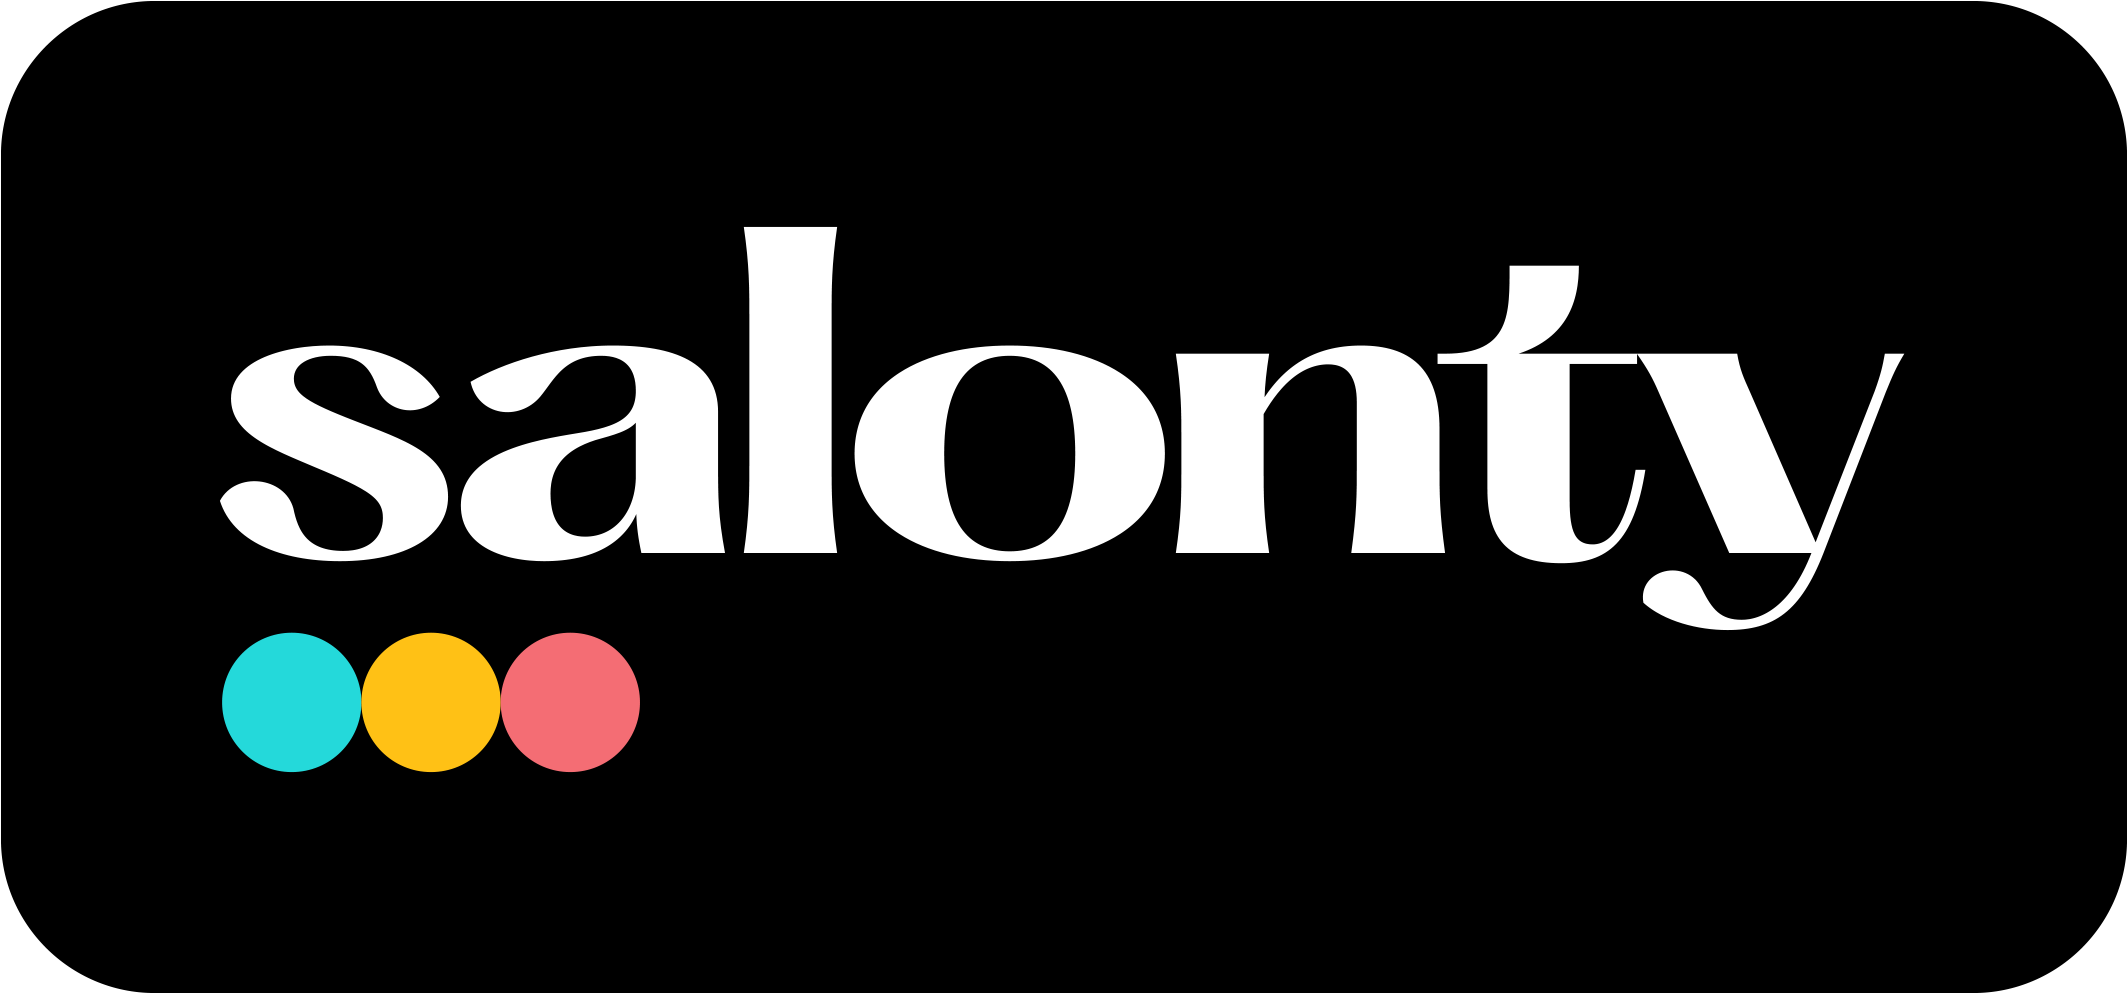 xSalonty logo